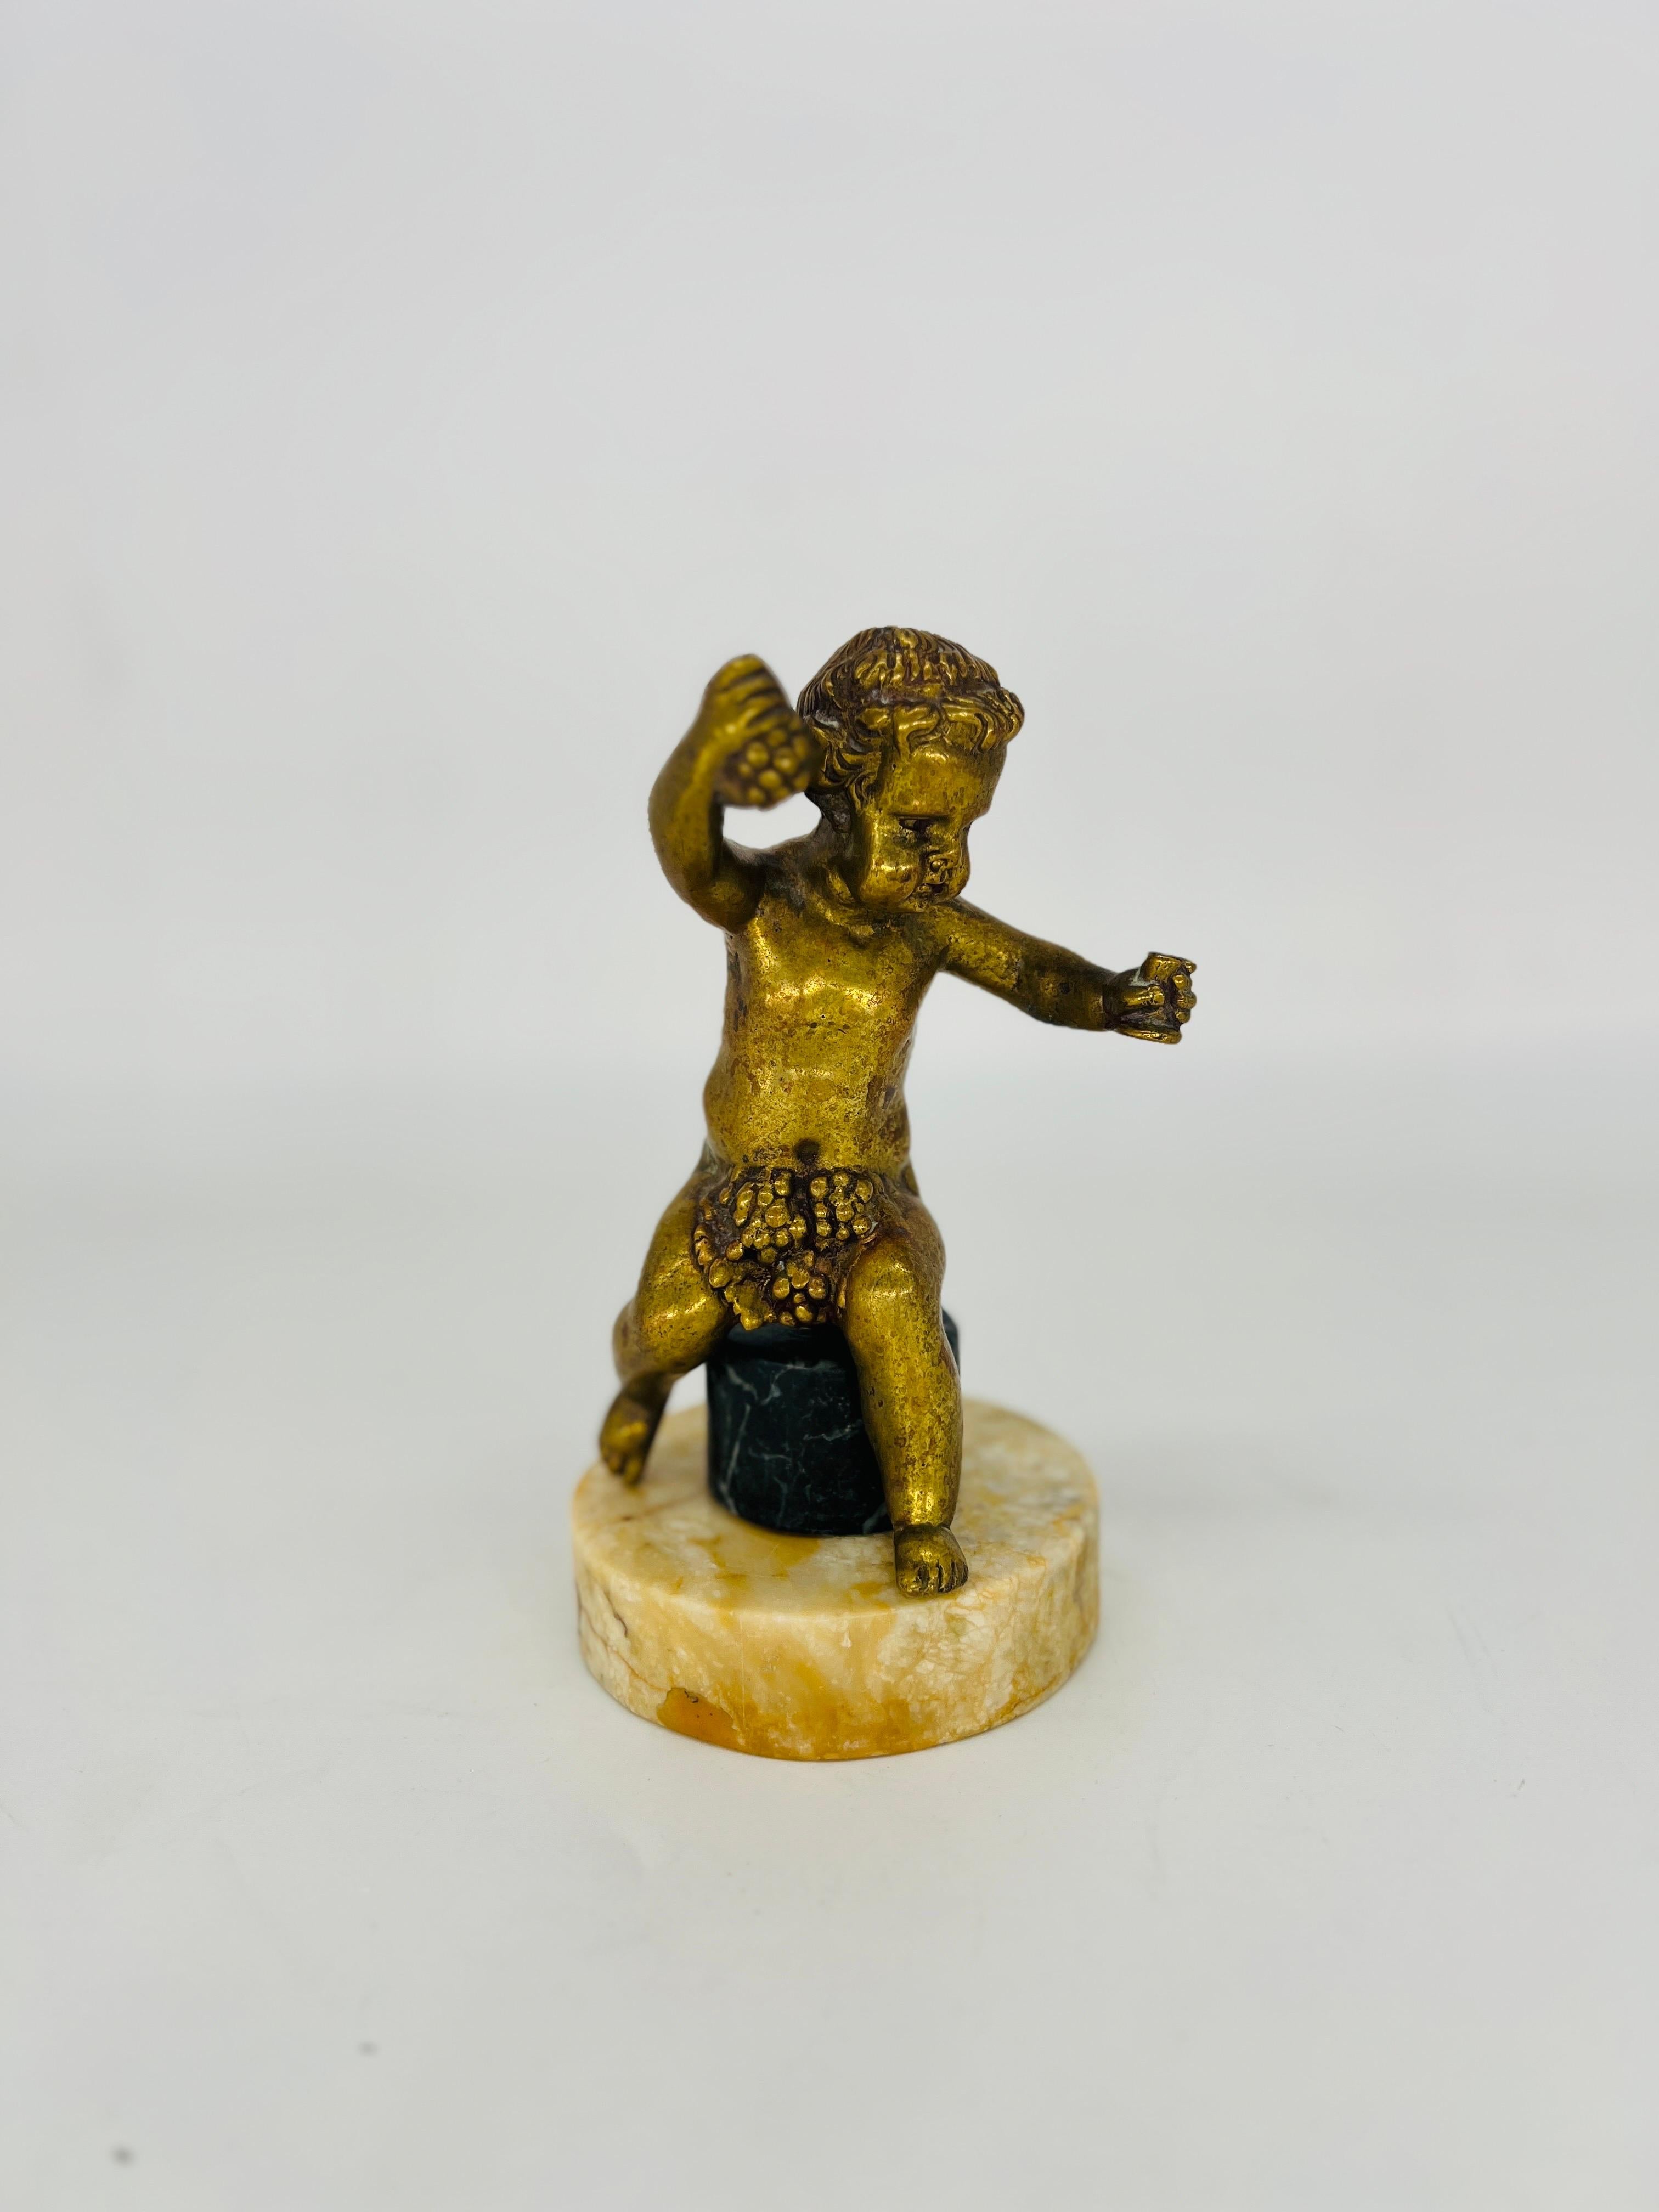 Renaissance Revival Antique French Gilt Bronze “Grapes into Wine” Cherub Statue Falconet Style For Sale